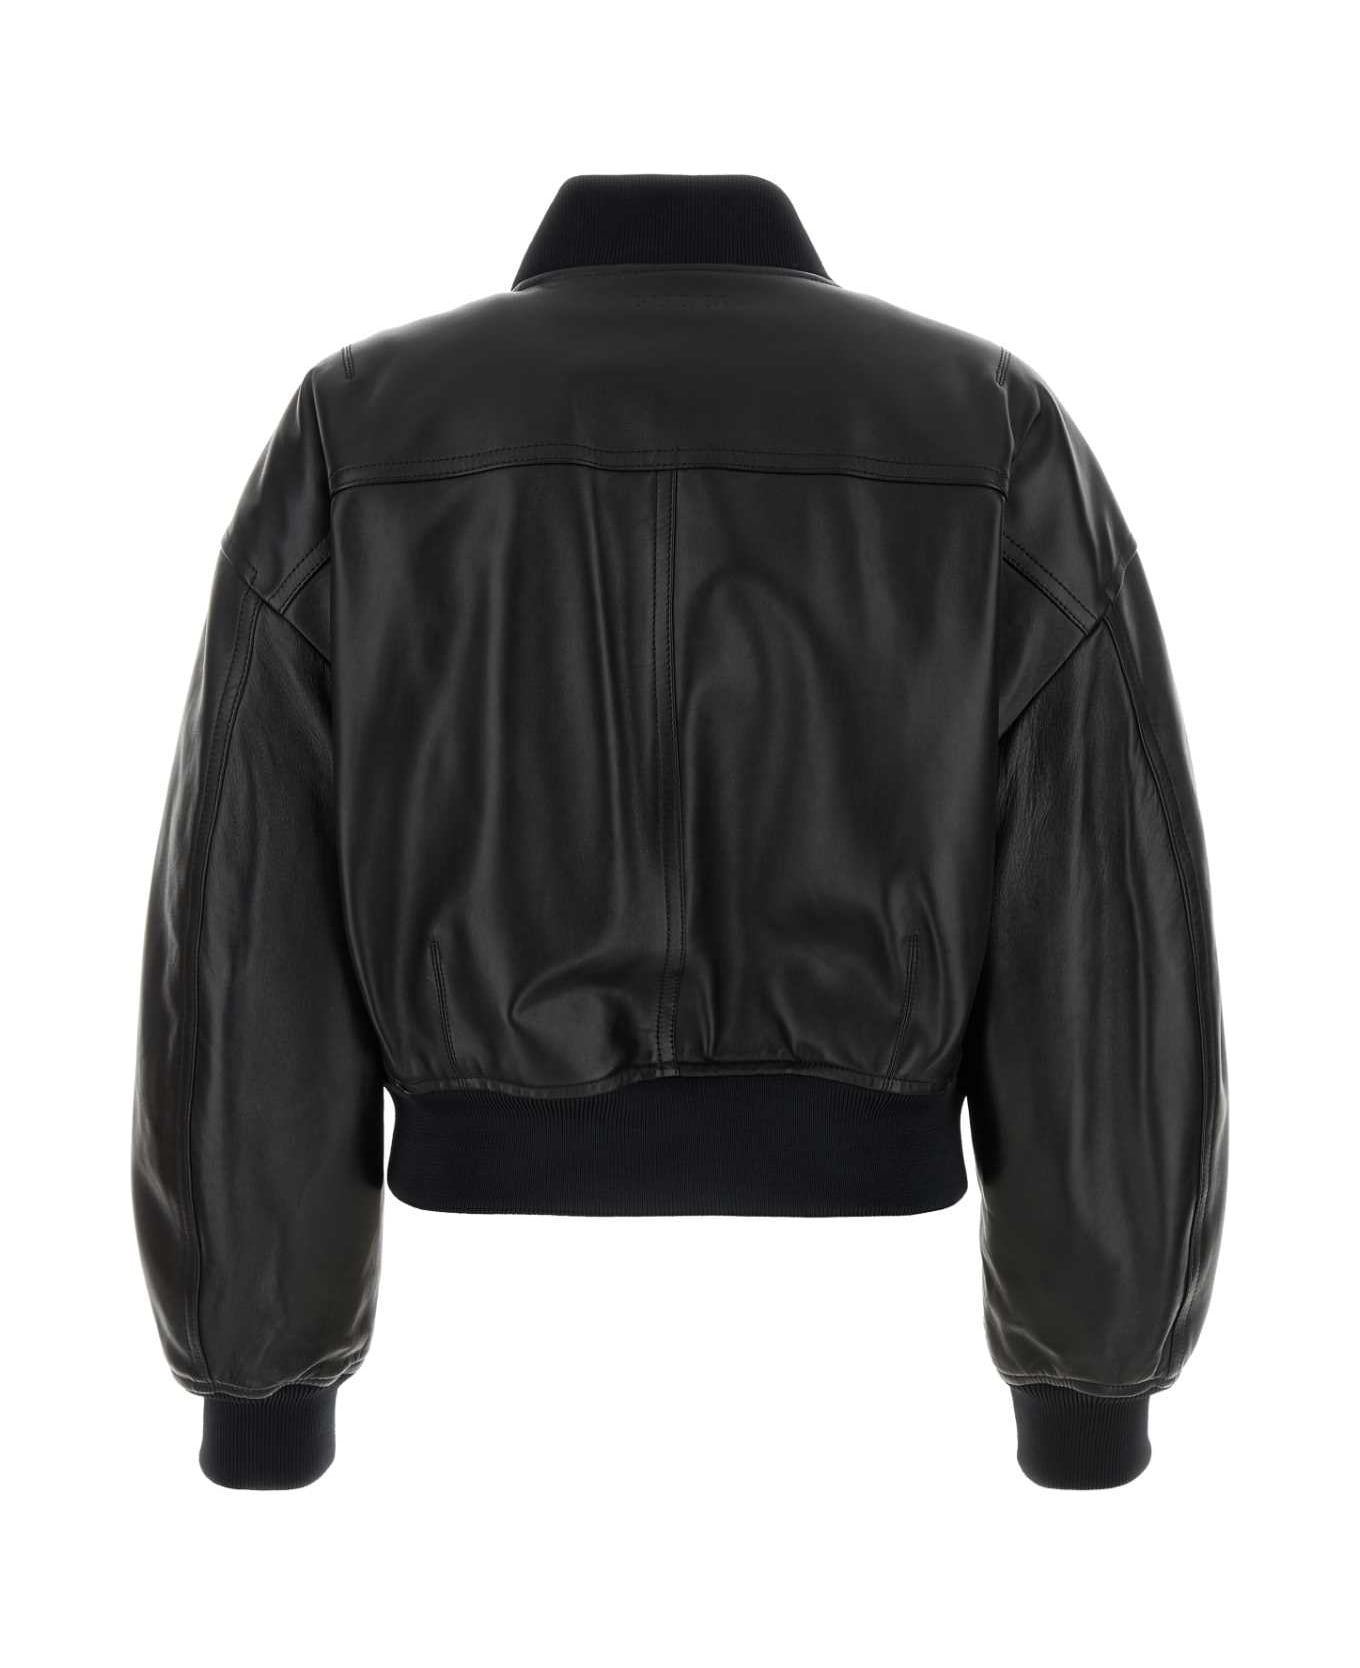 Gucci Black Leather Bomber Jacket - Black